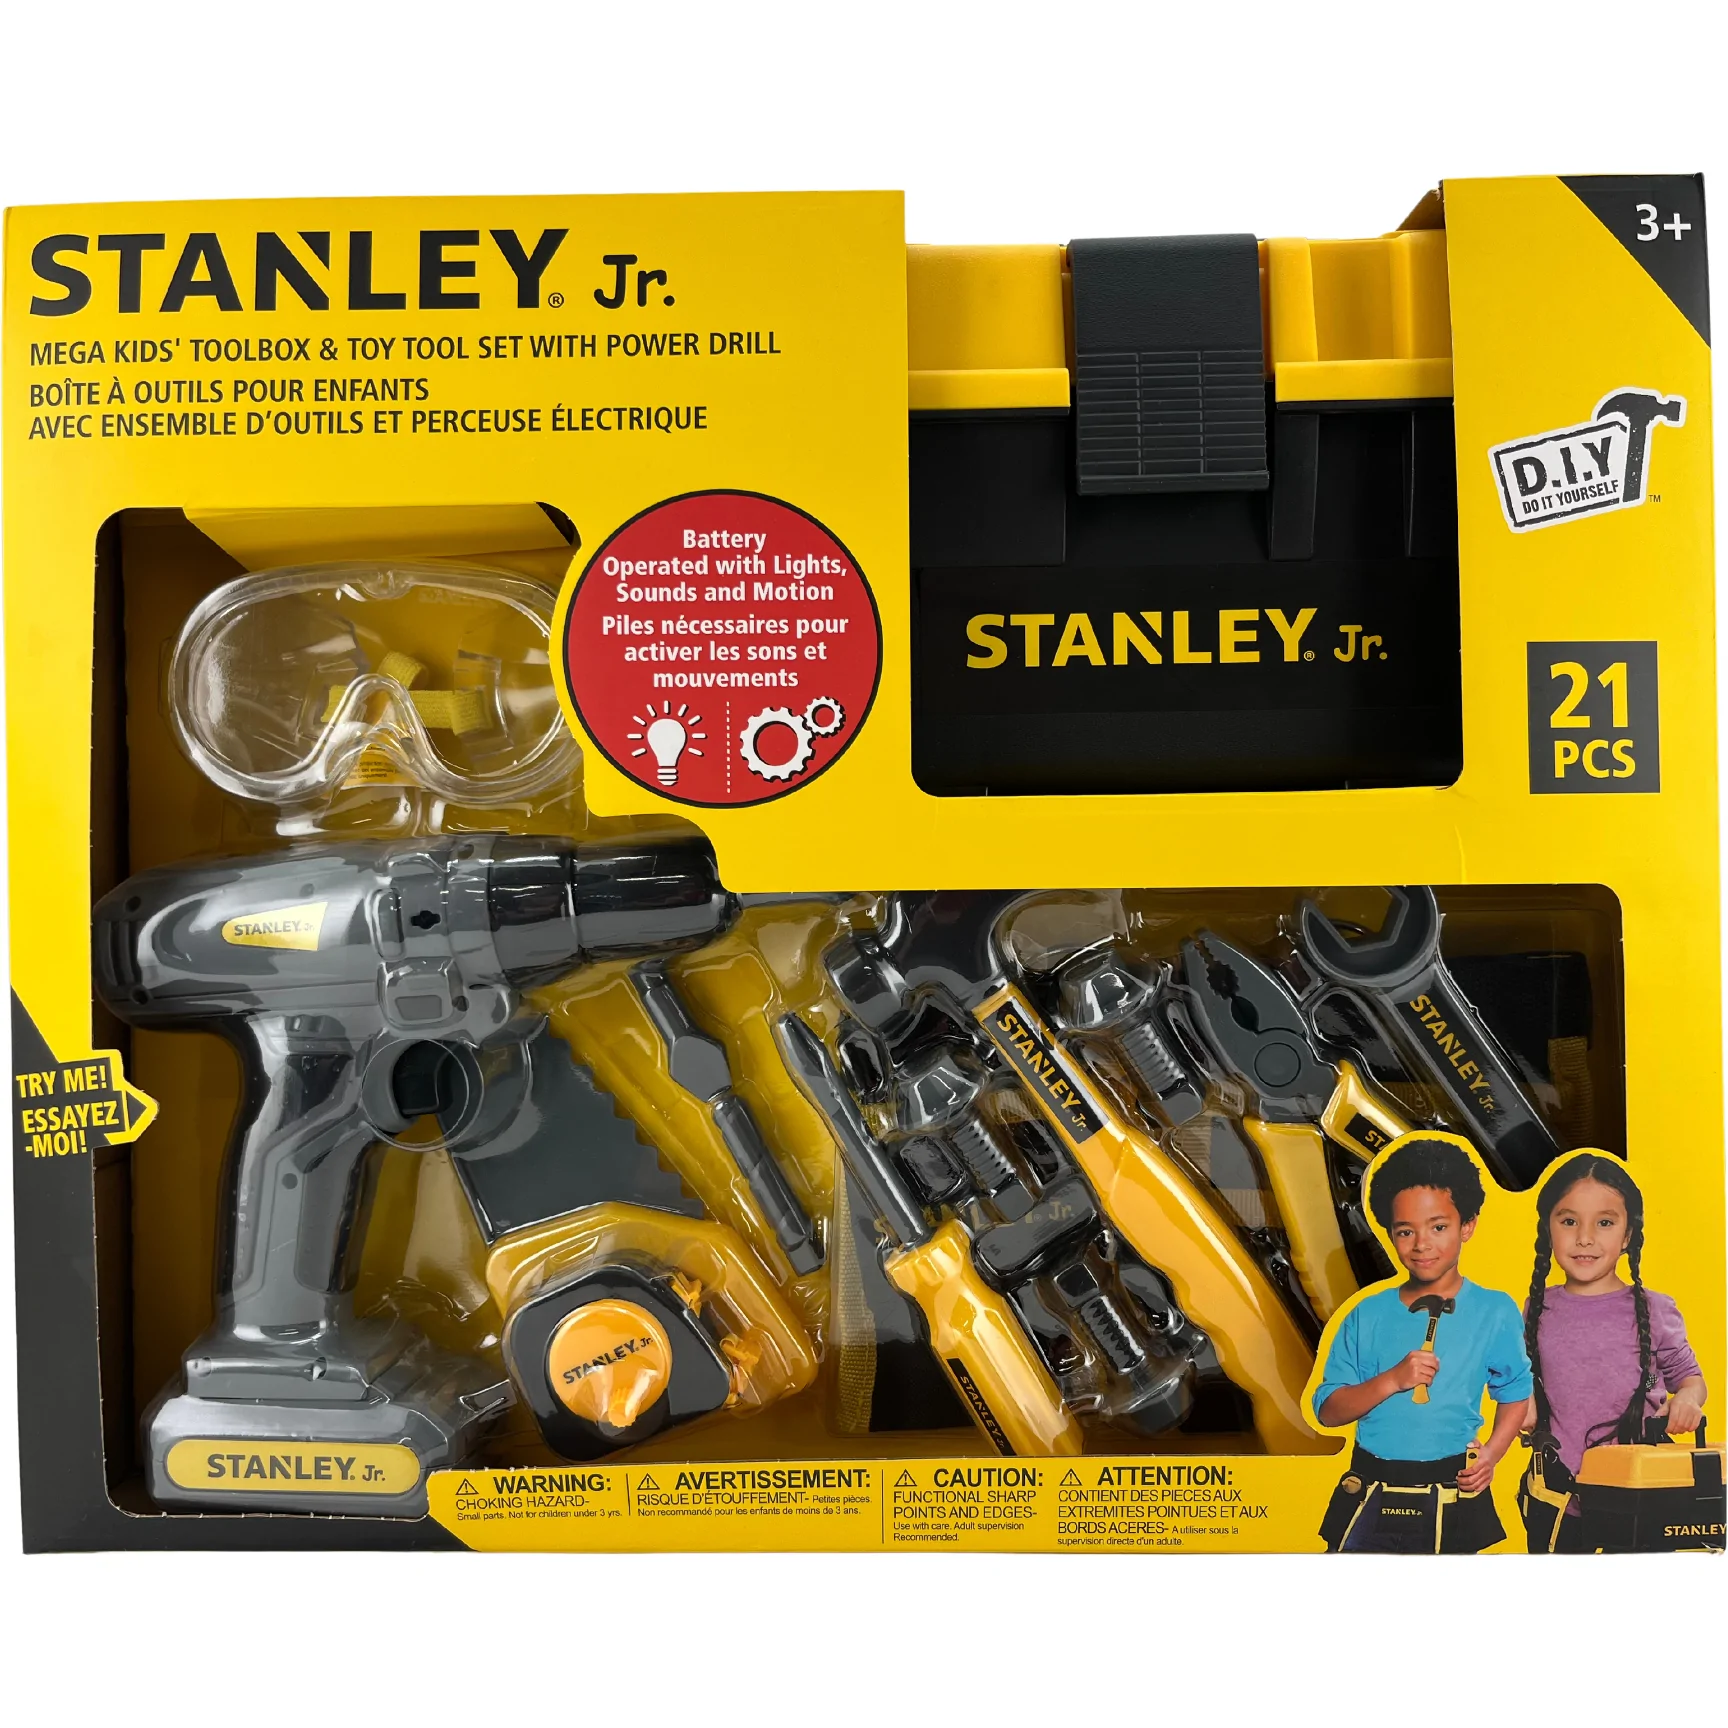 Stanley Junior Tool Kit / Tool Box / Toy Tool Set / Children's Toy / Yellow & Grey